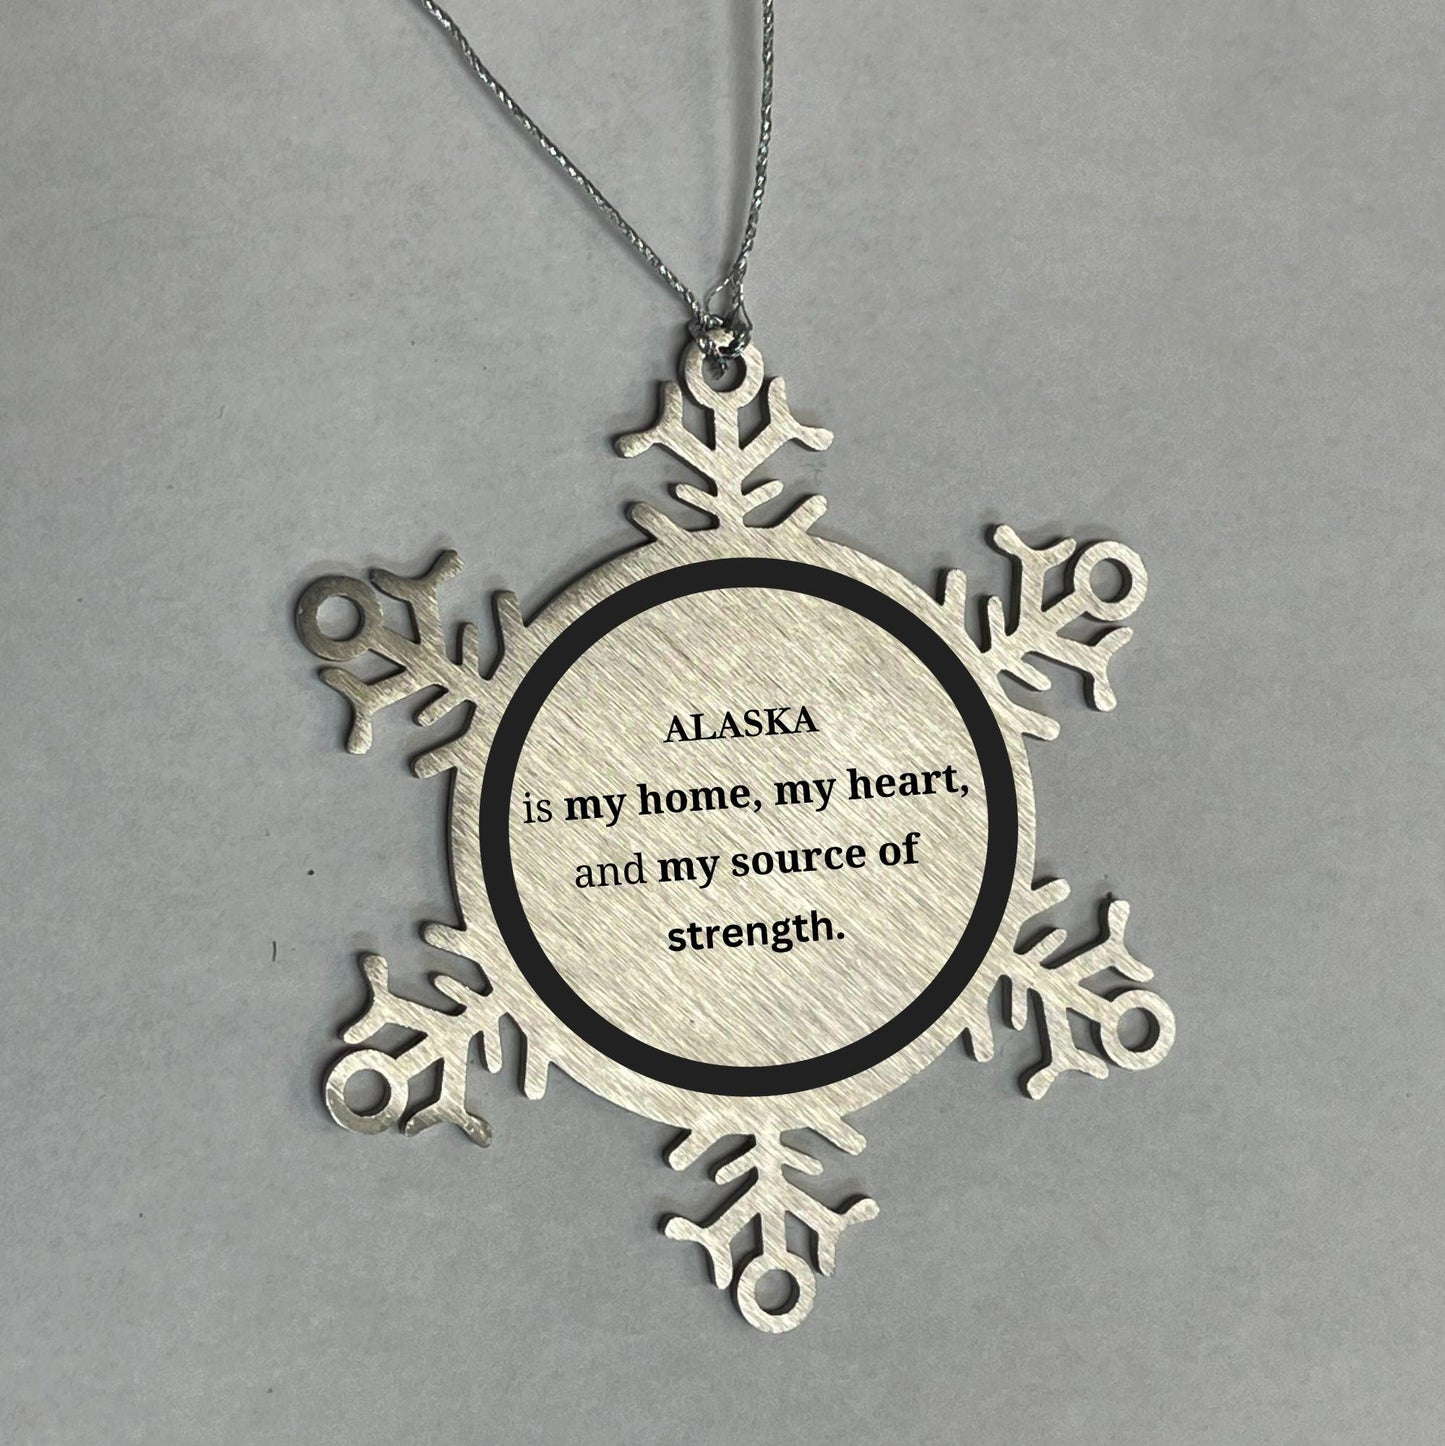 Alaska is my home Gifts, Lovely Alaska Birthday Christmas Snowflake Ornament For People from Alaska, Men, Women, Friends - Mallard Moon Gift Shop